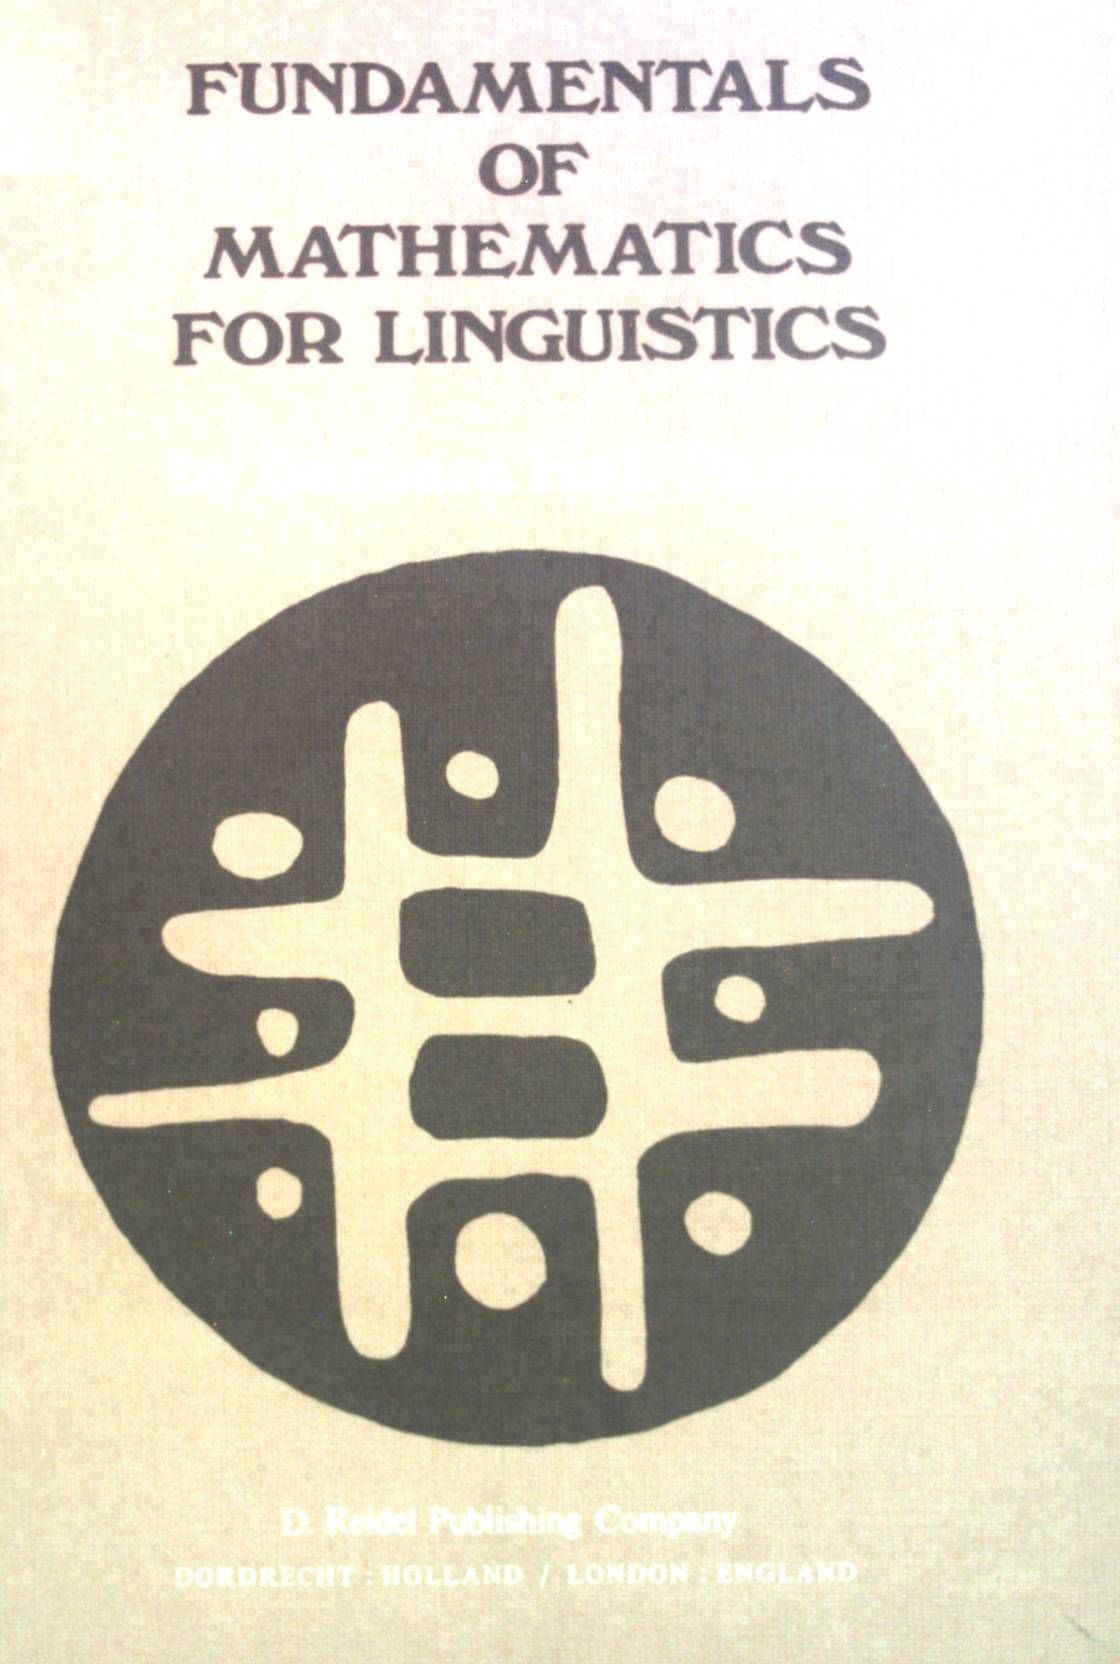 Fundaments of Mathematics for Linguistics. - Partee, Barbara Hall